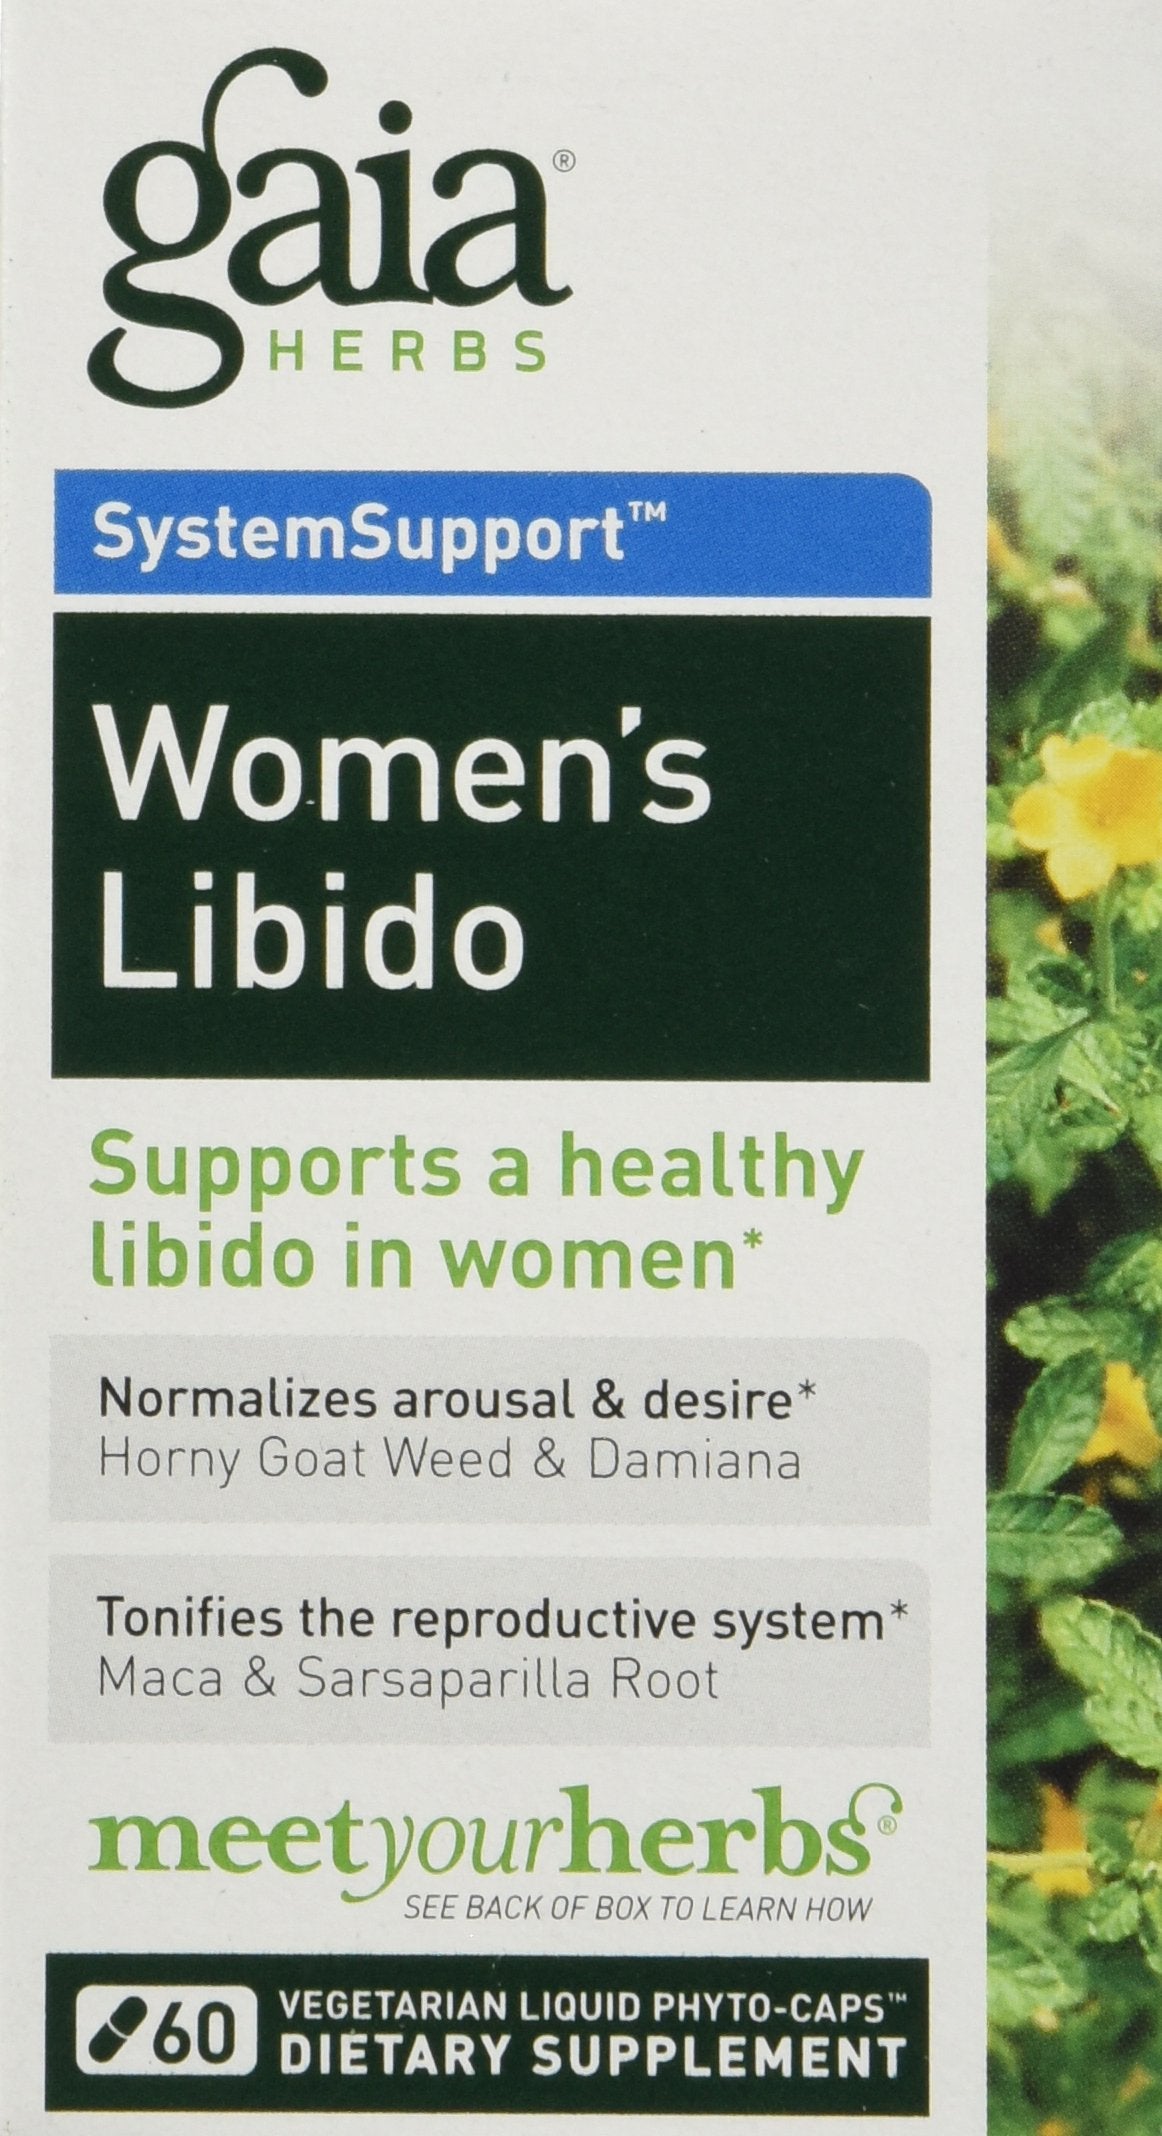 Gaia Herbs Women's Libido, 60 Vegan Liquid Phyto-Caps